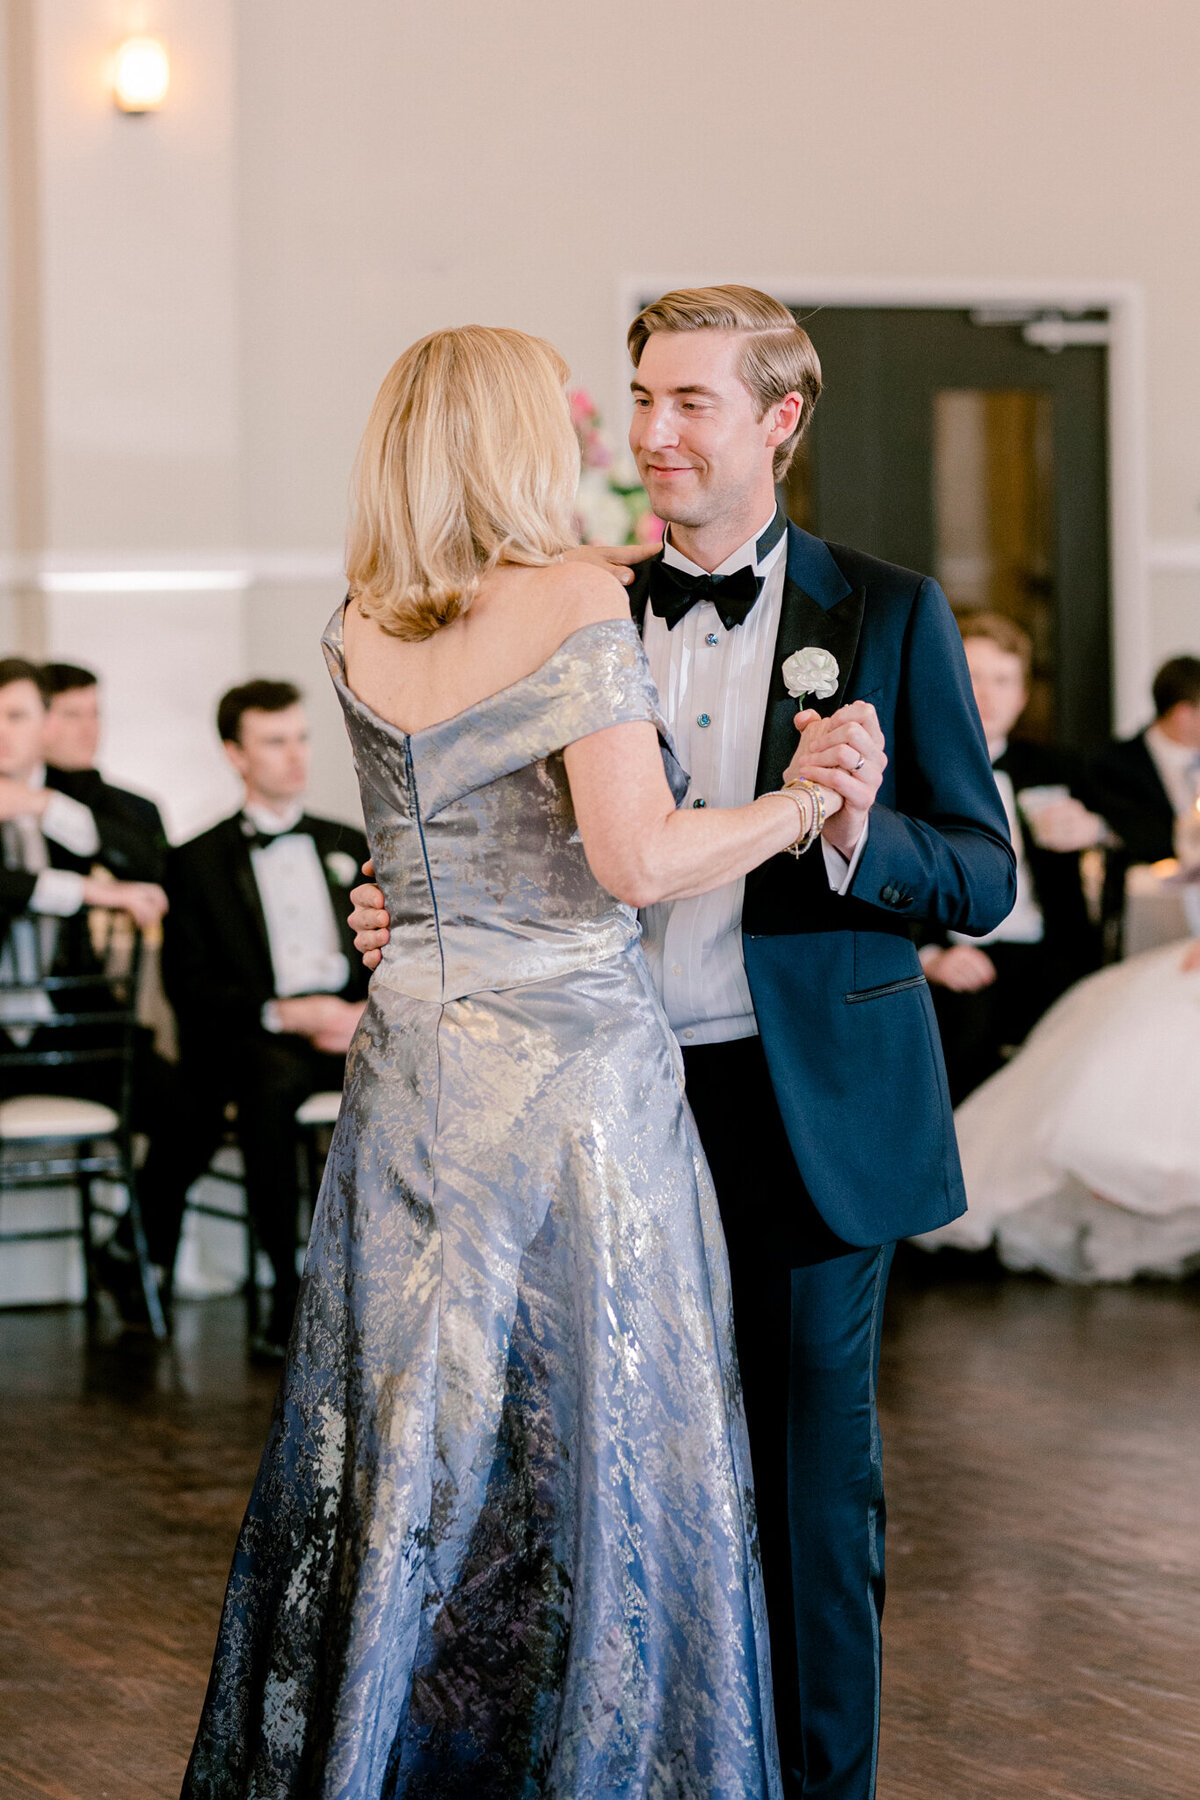 Shelby & Thomas's Wedding at HPUMC The Room on Main | Dallas Wedding Photographer | Sami Kathryn Photography-203